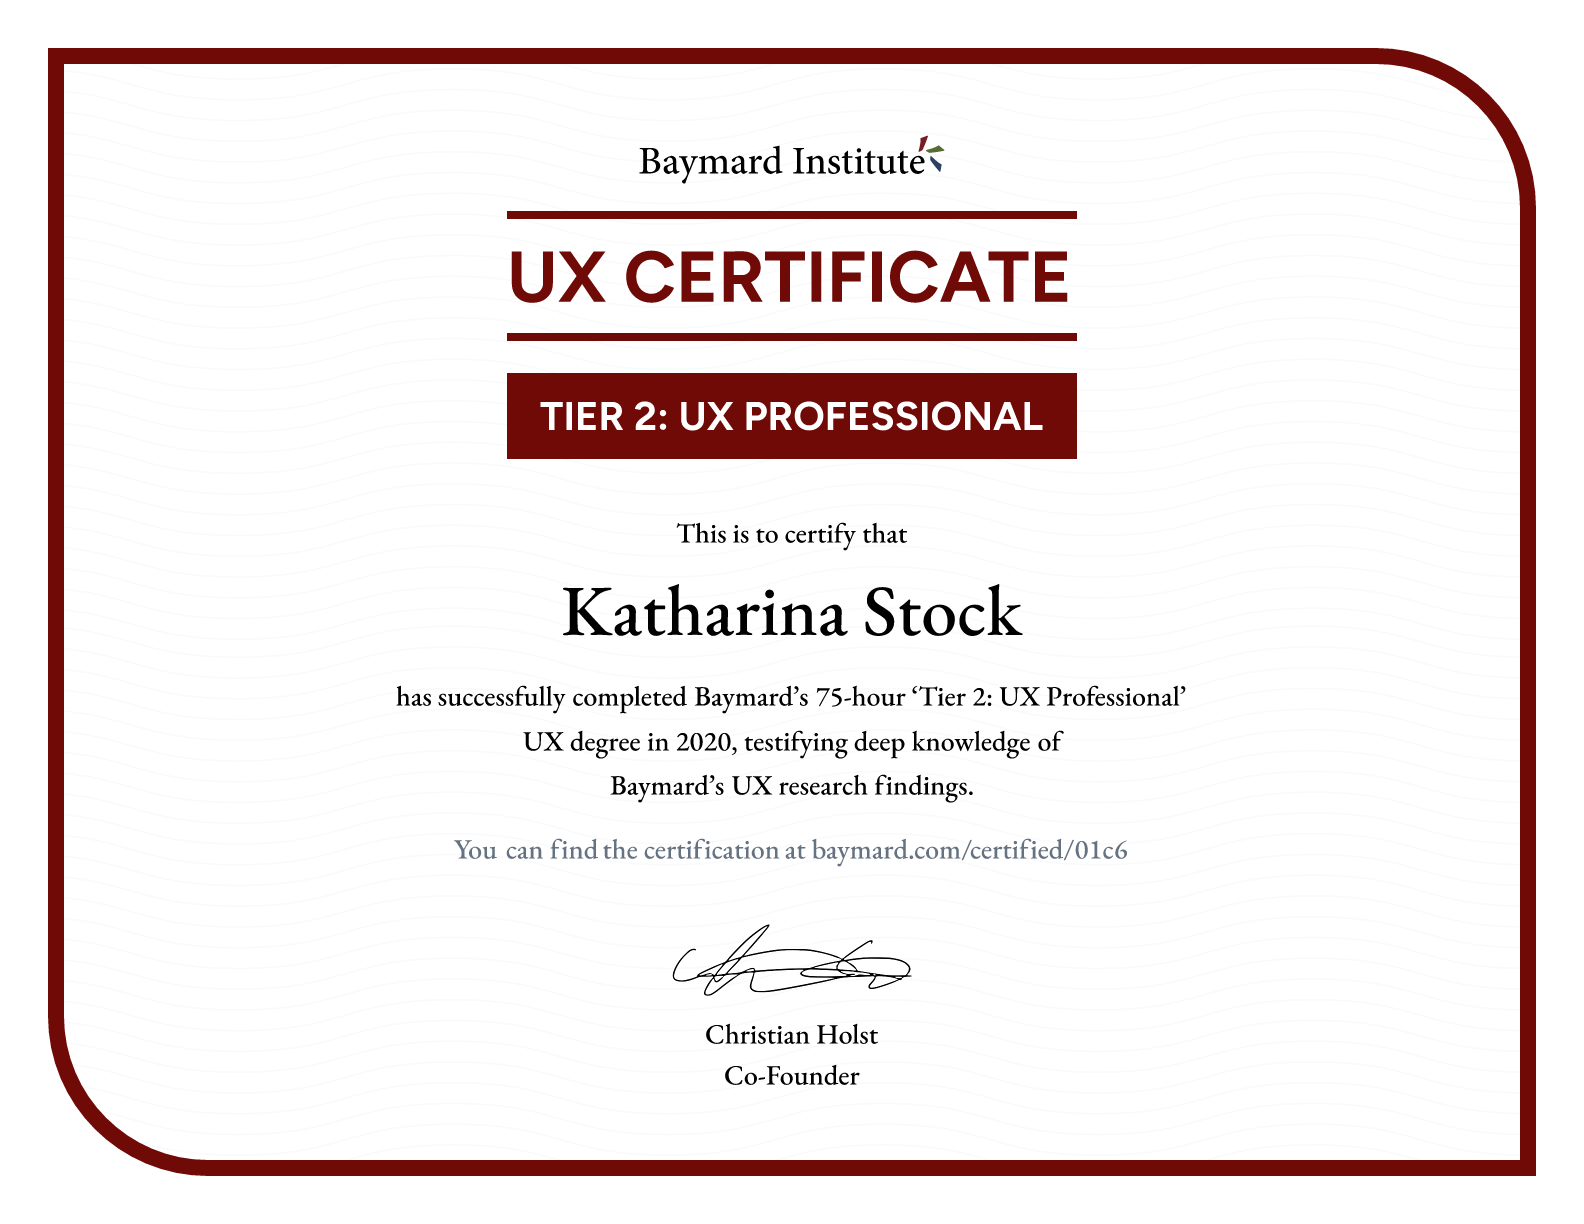 Katharina Stock’s certificate